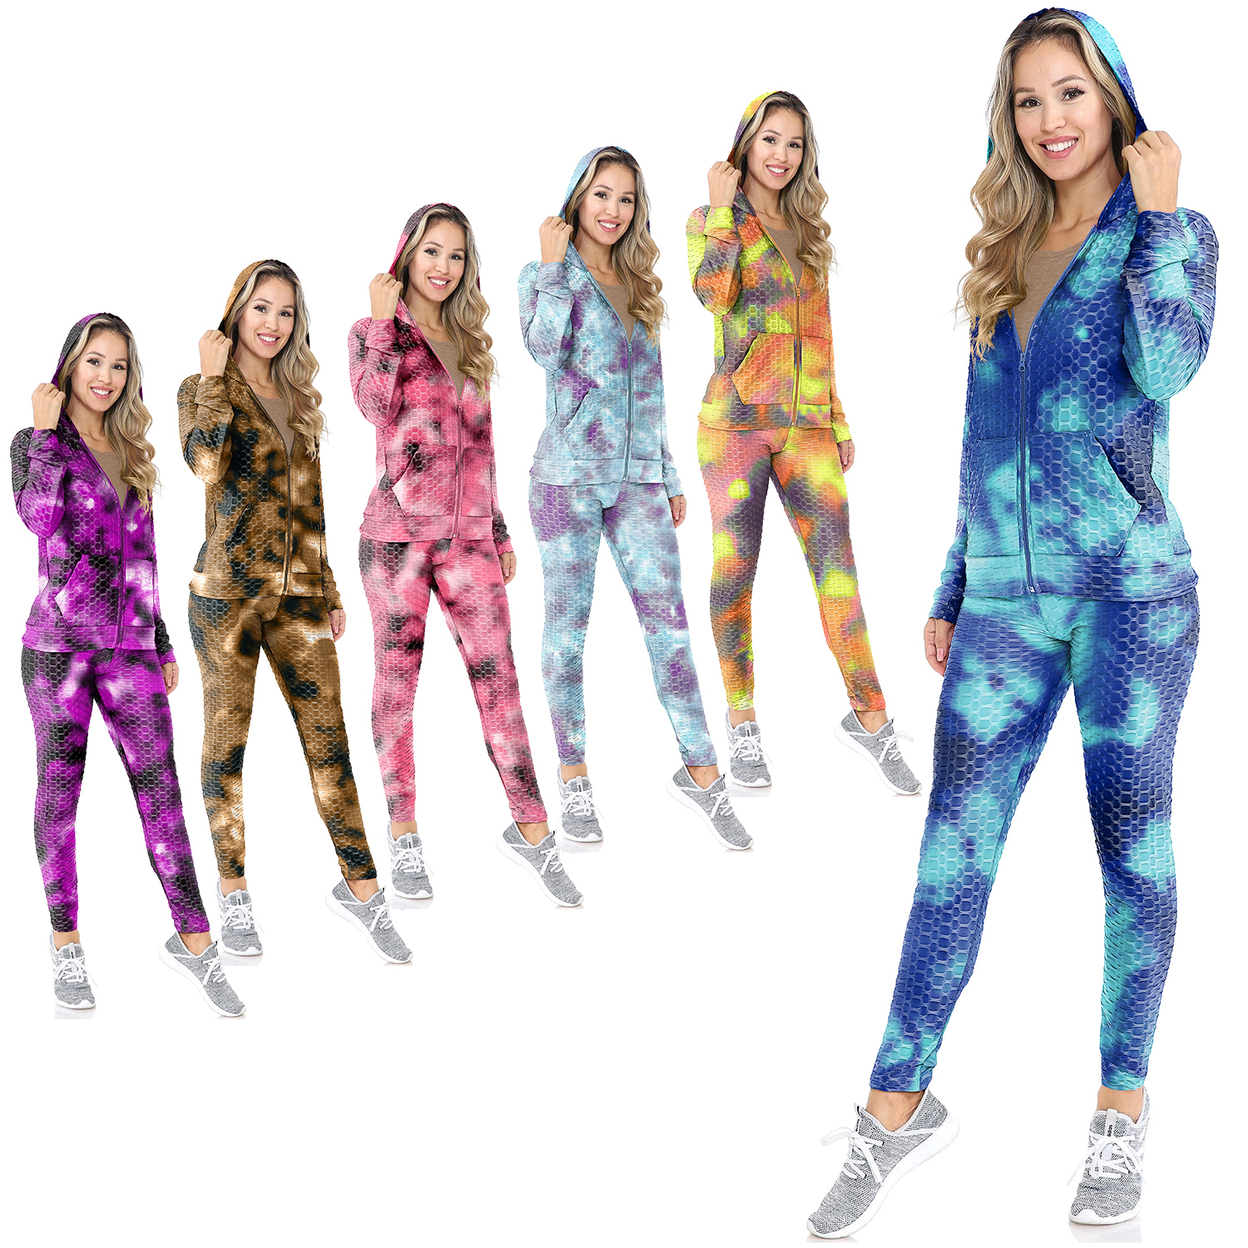 2-Set: Women's Athletic Anti-Cellulite Textured Tie Dye Body Contour Yoga Track Suit W/ Hood - Small, Tie Dye